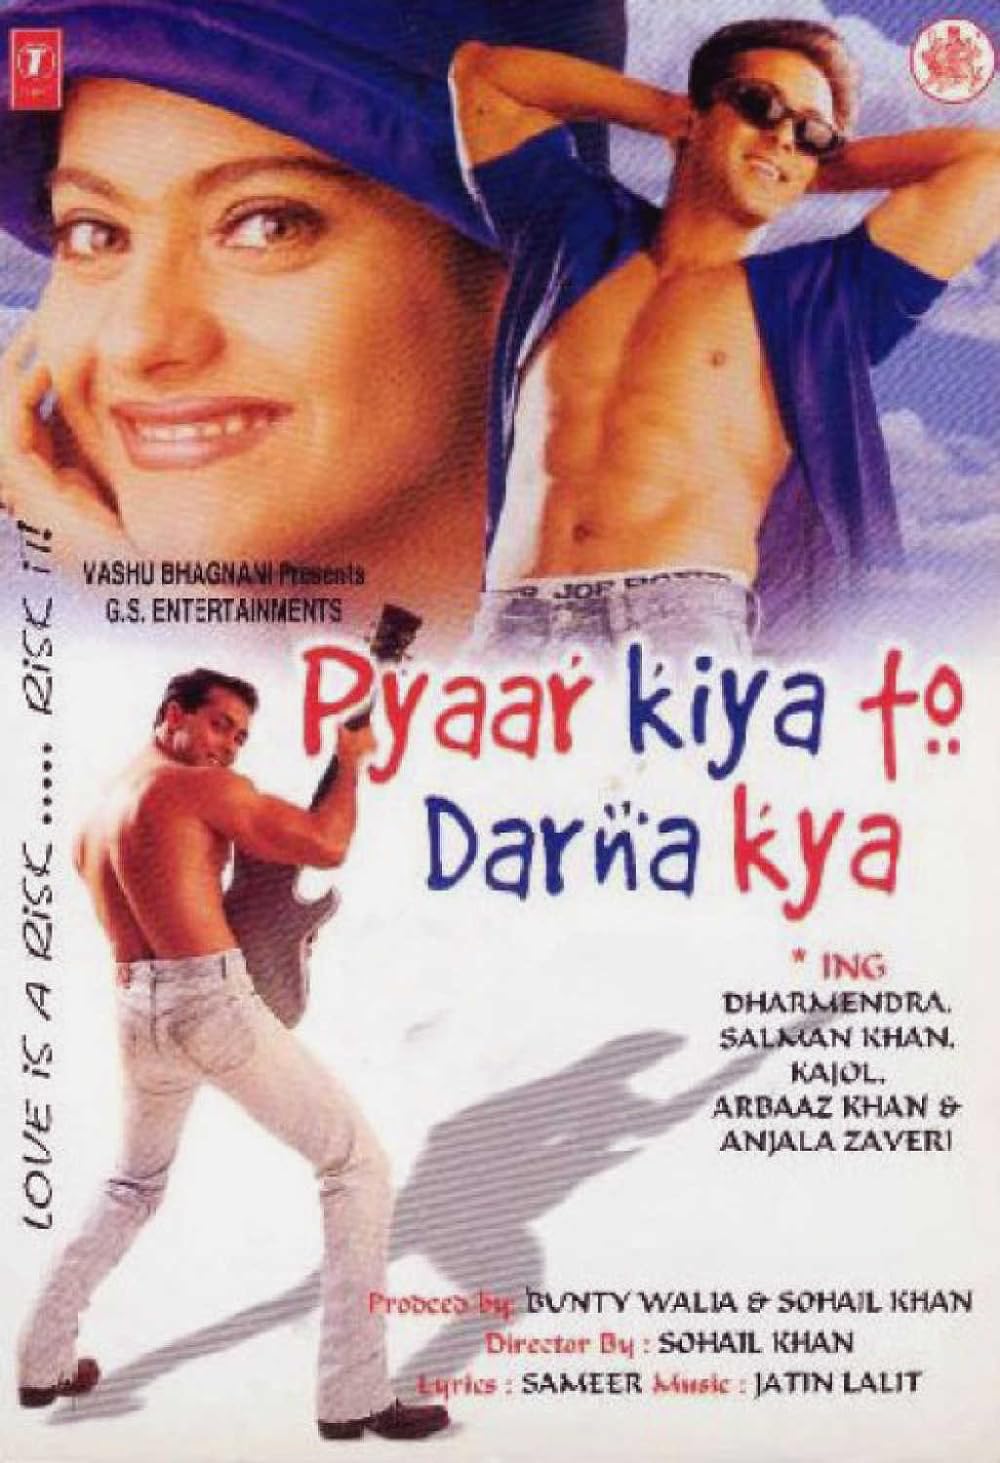 assets/img/movie/Pyaar Kiya To Darna Kya 1998.jpg